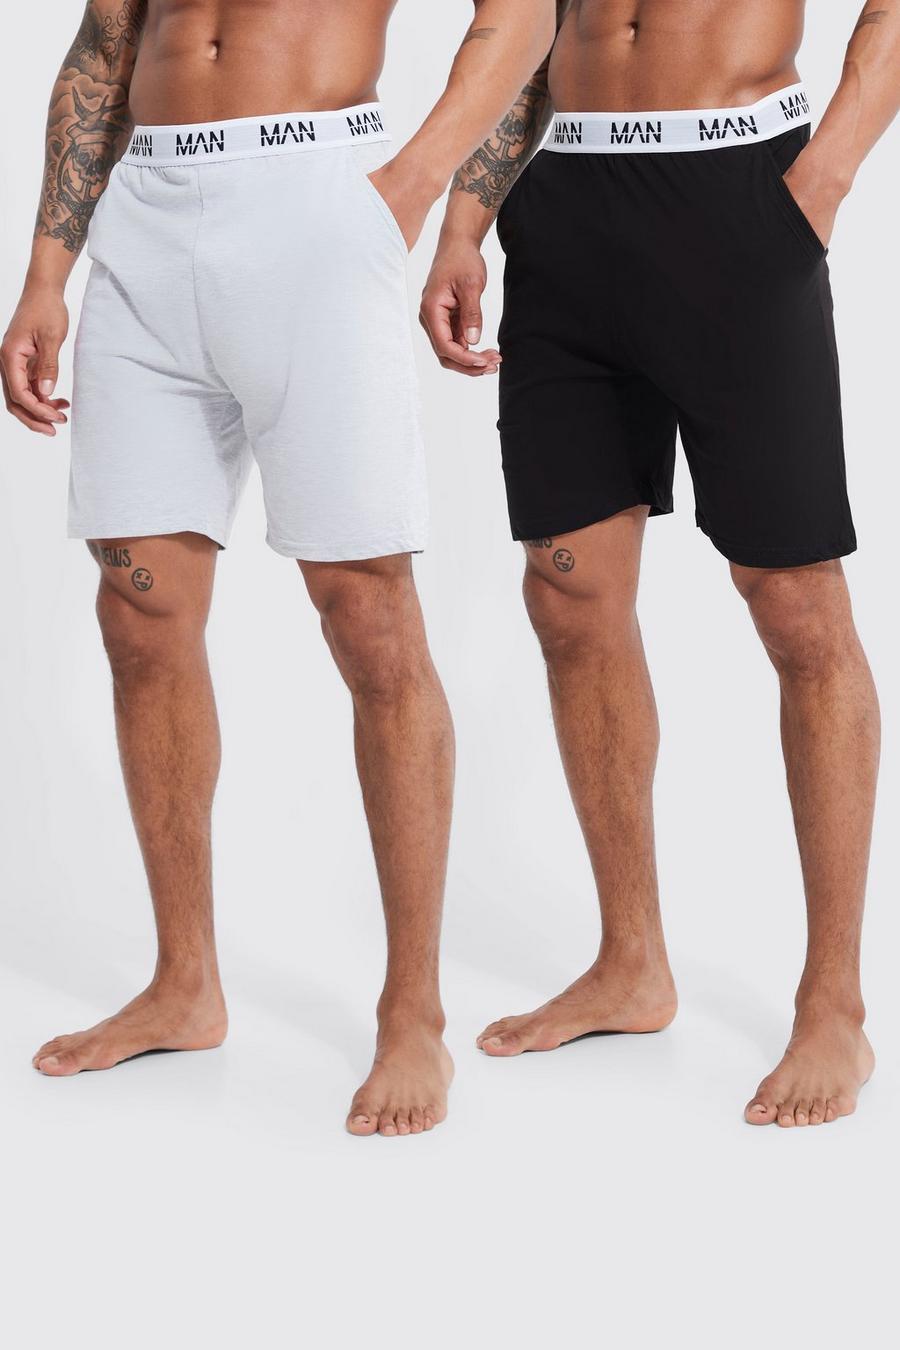 Lot de 2 shorts confort - MAN, Multi